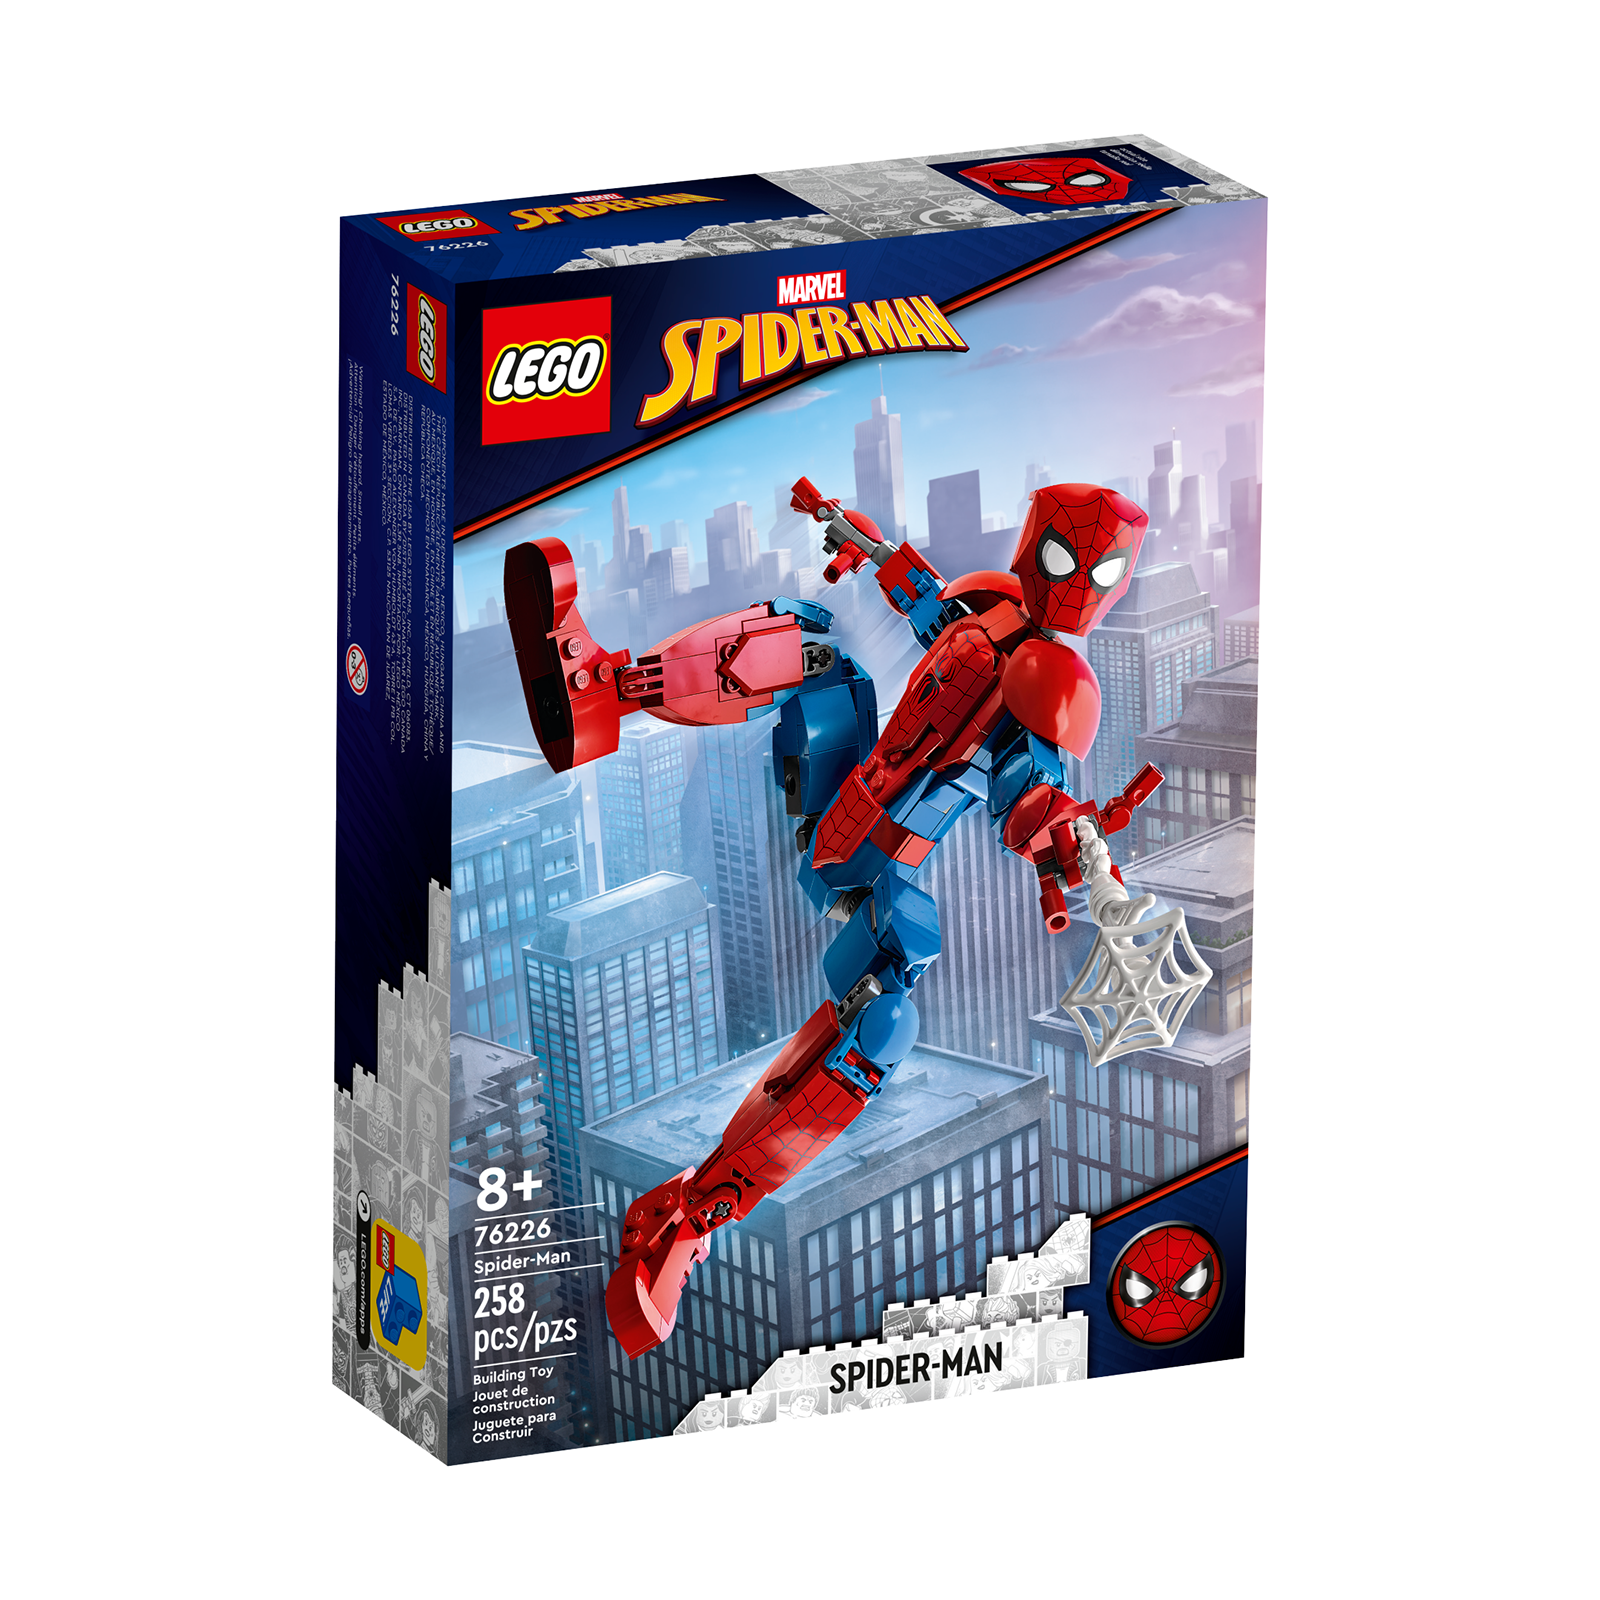 Đồ chơi LEGO 76226 Marvel Spider-Man Building Set 